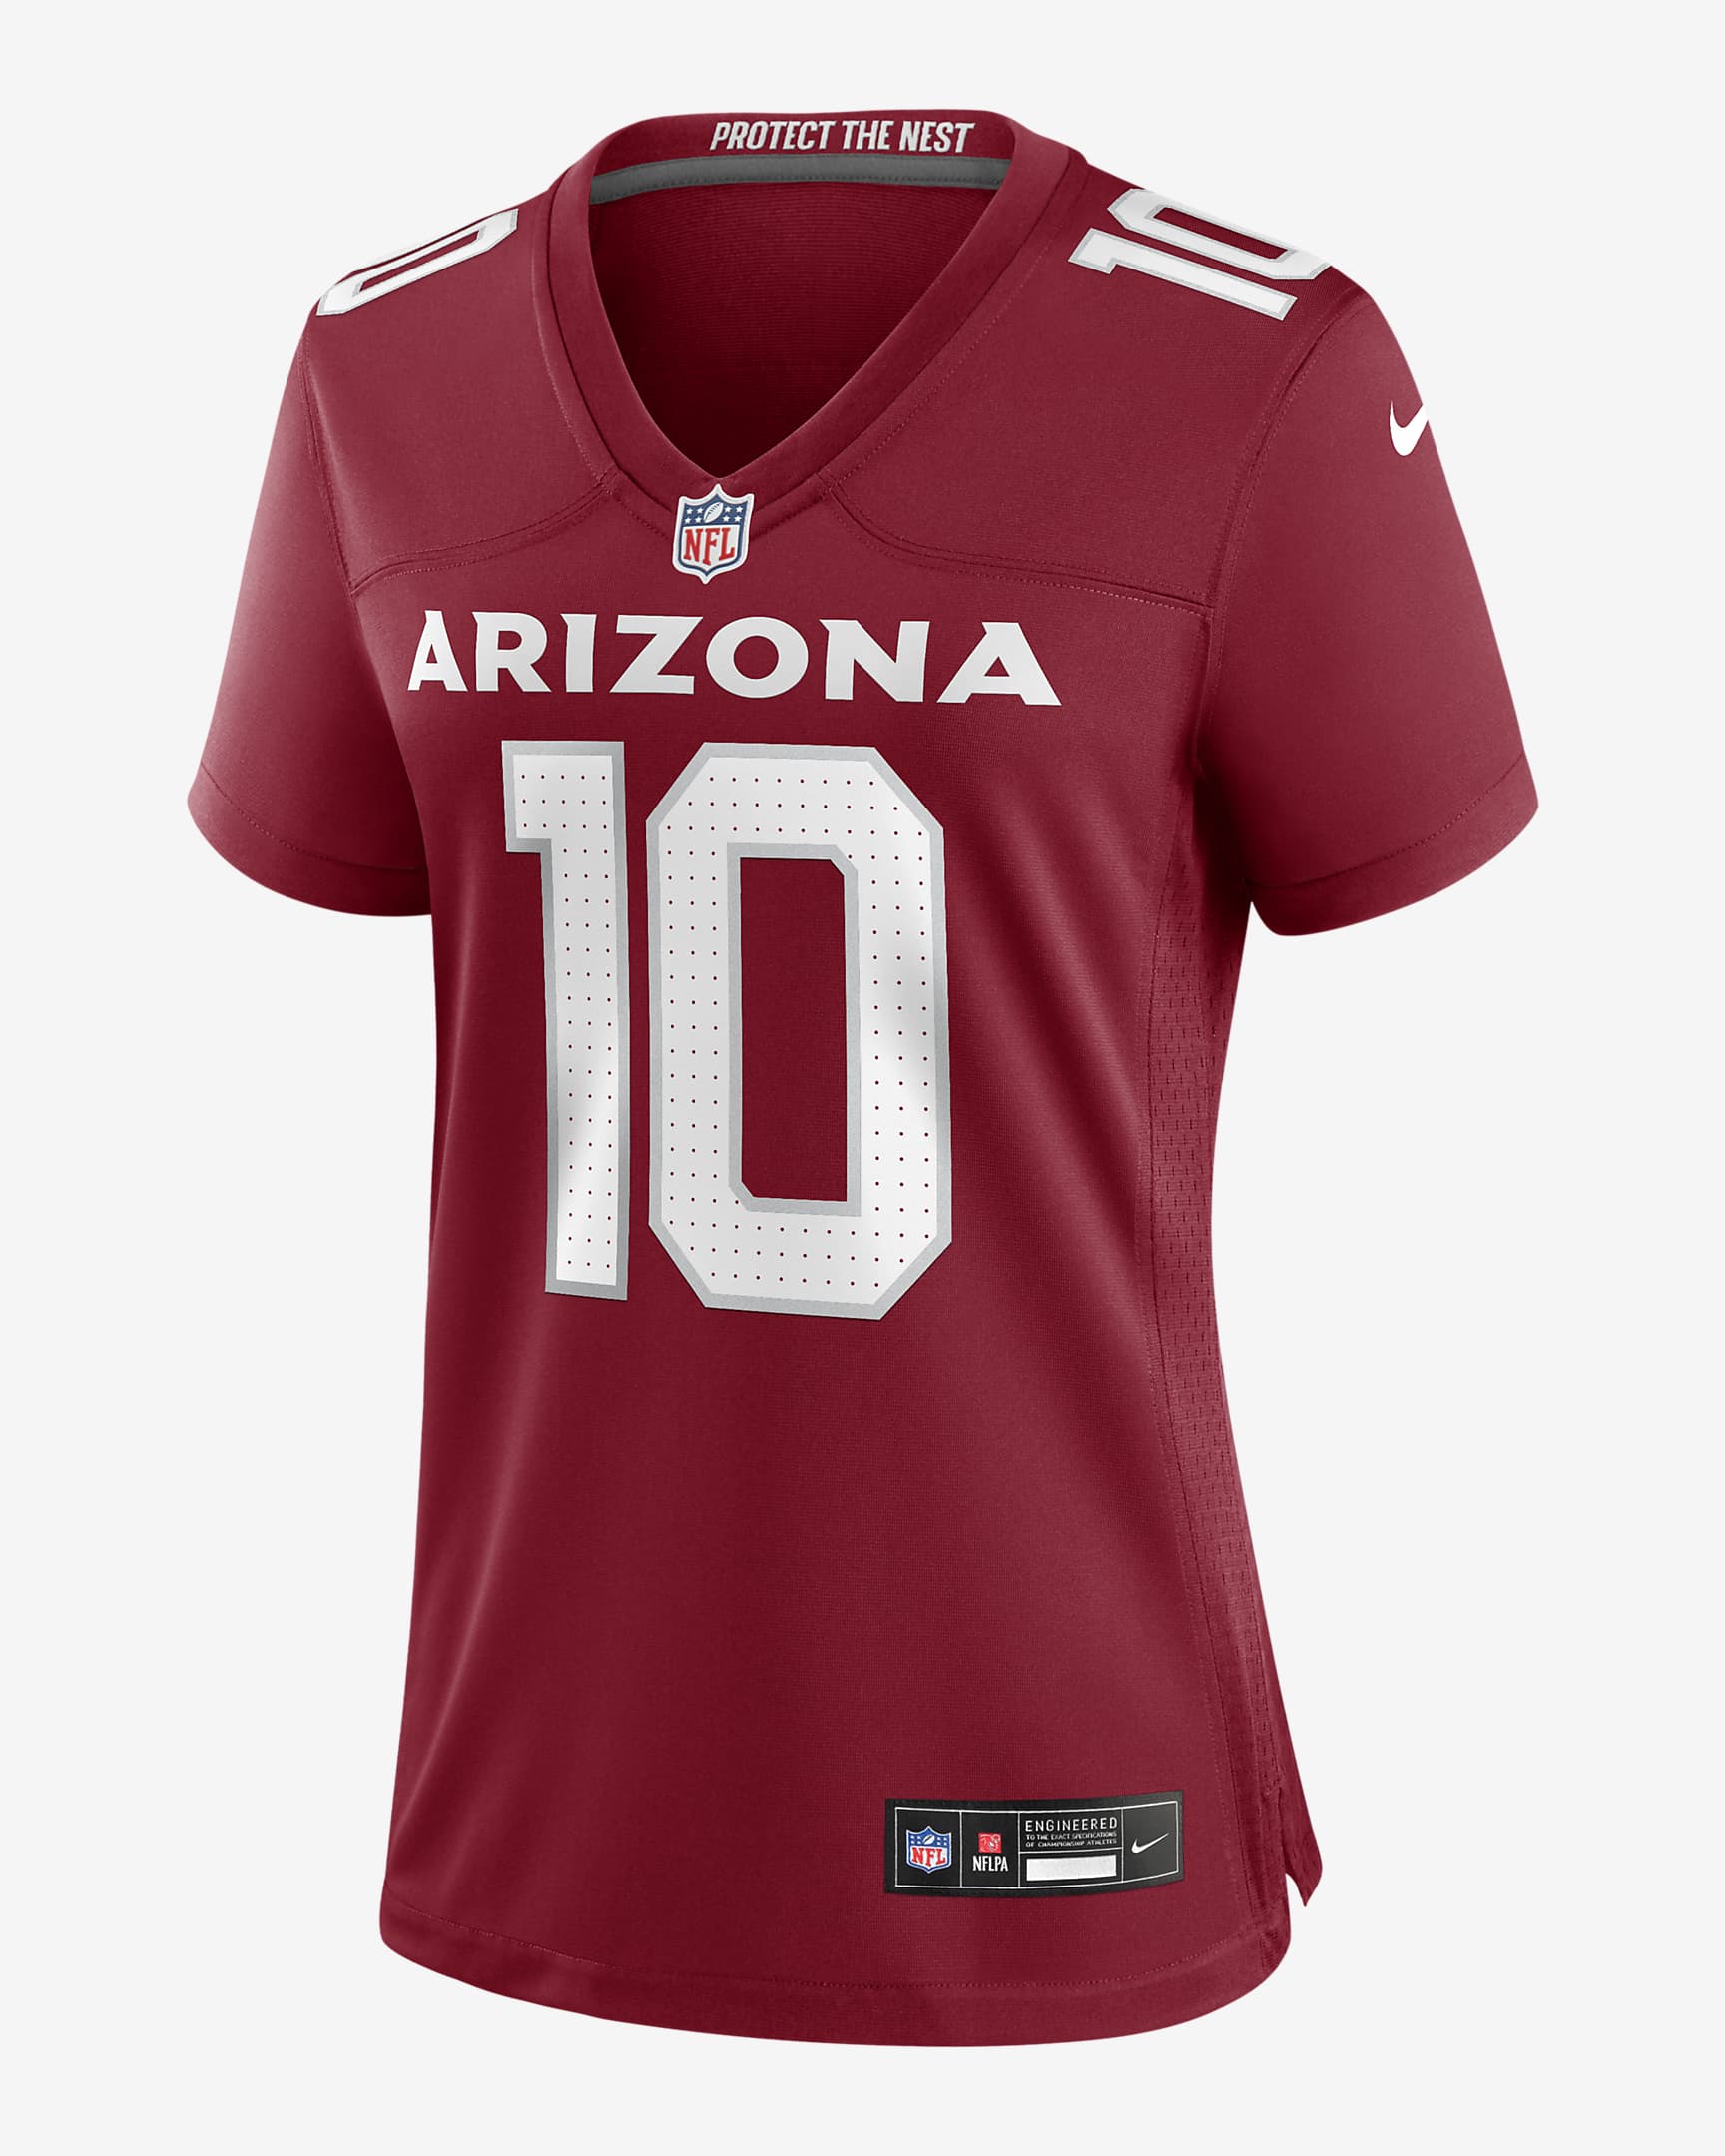 DeAndre Hopkins Arizona Cardinals Women's Nike NFL Game Football Jersey ...